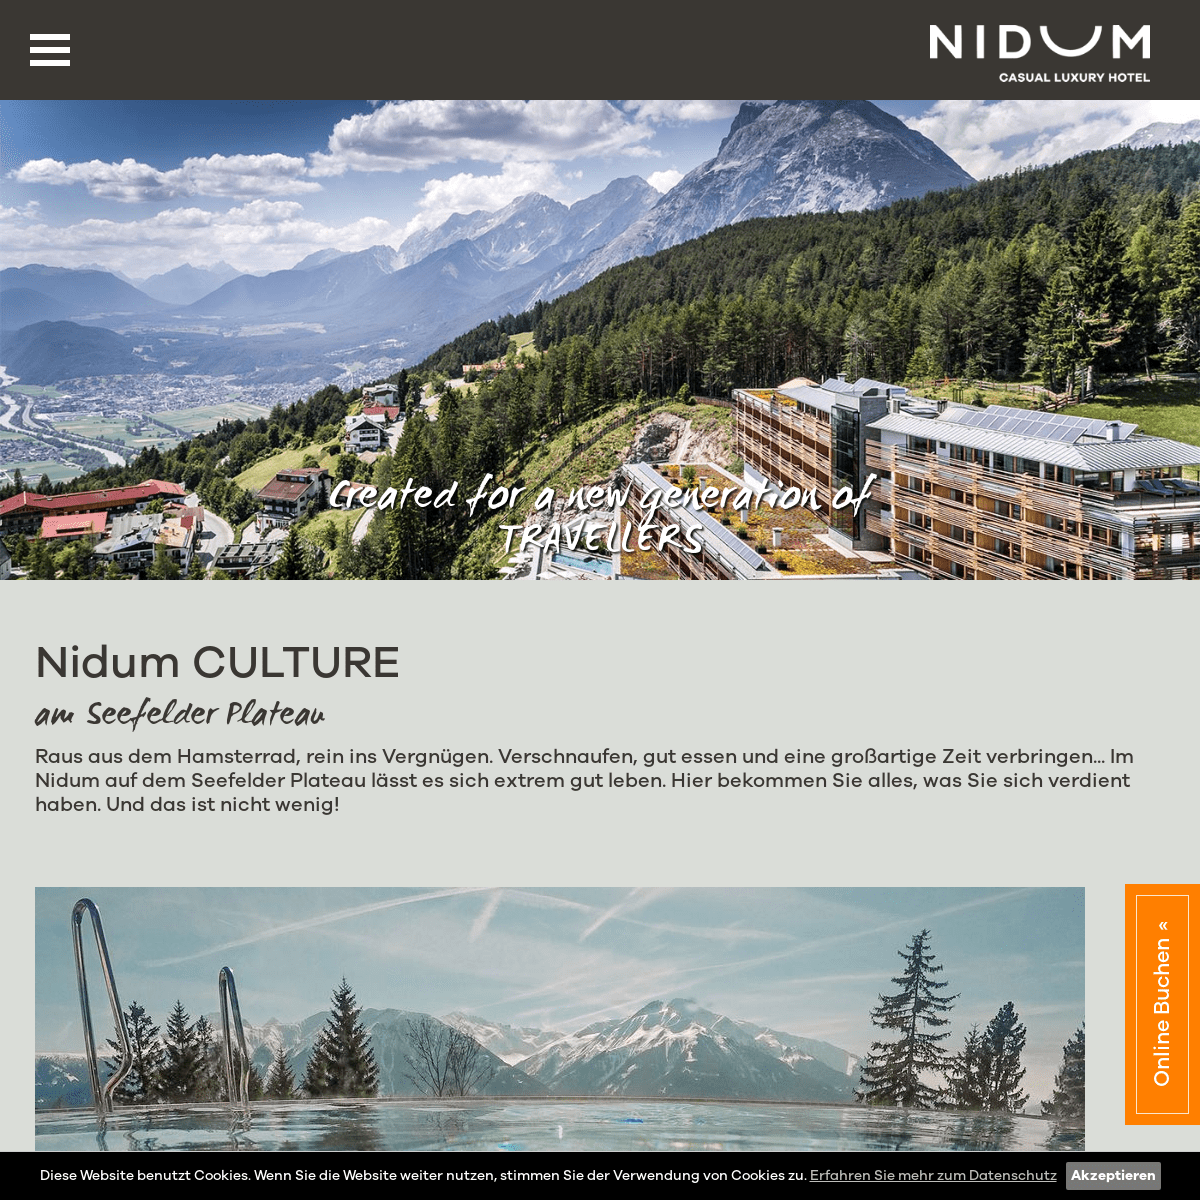 A complete backup of nidum-hotel.com